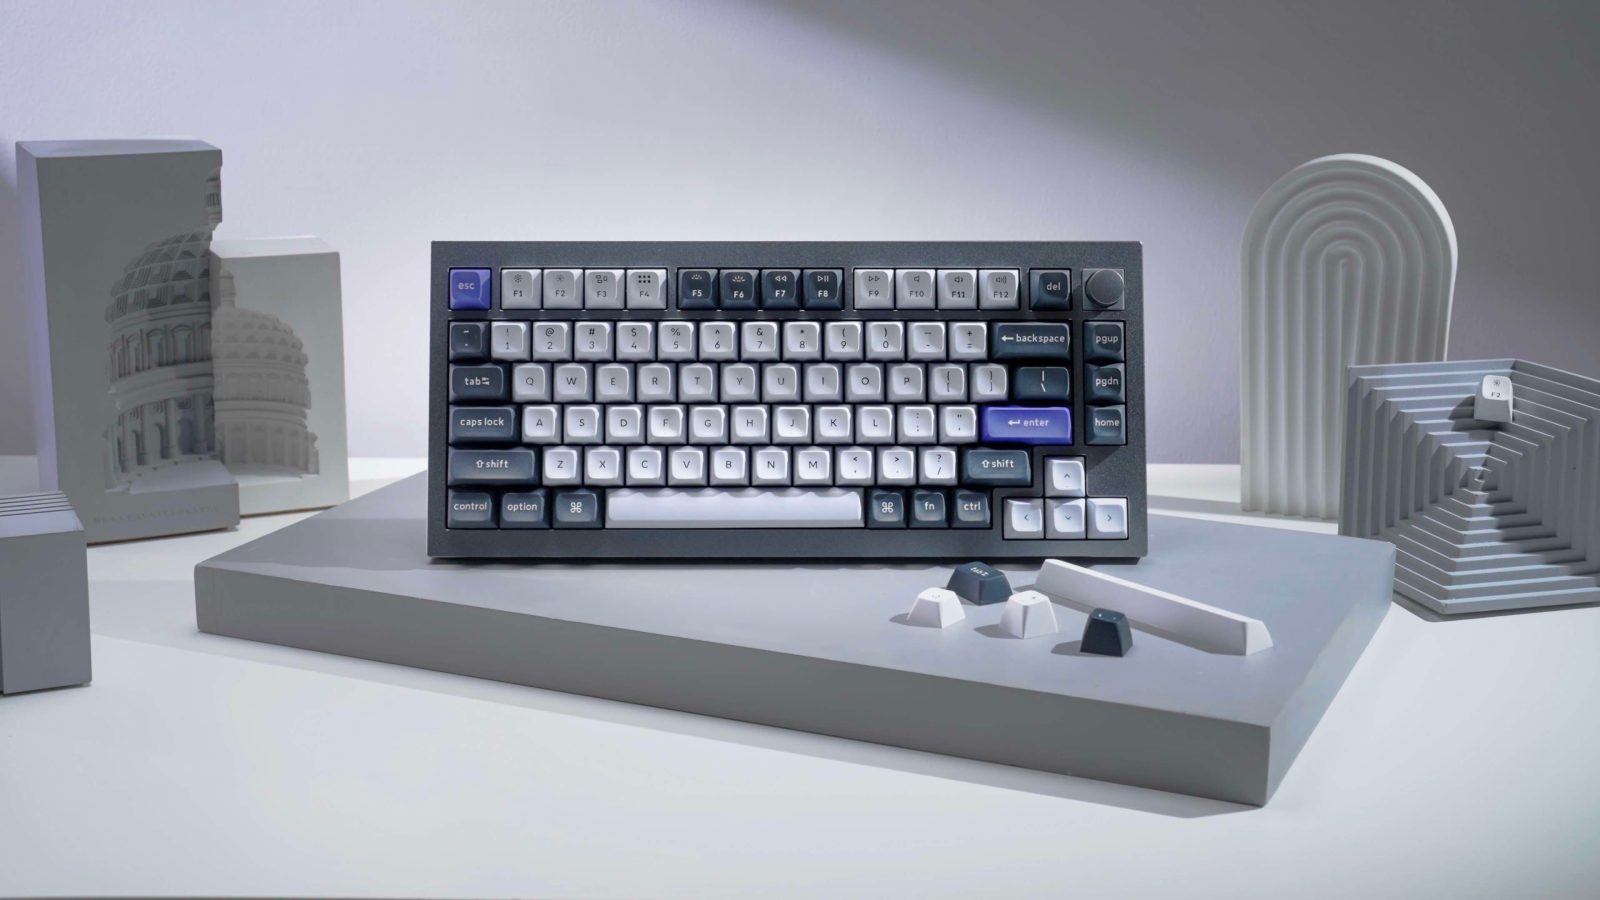 Keychron Q1 Pro wireless mechanical keyboard